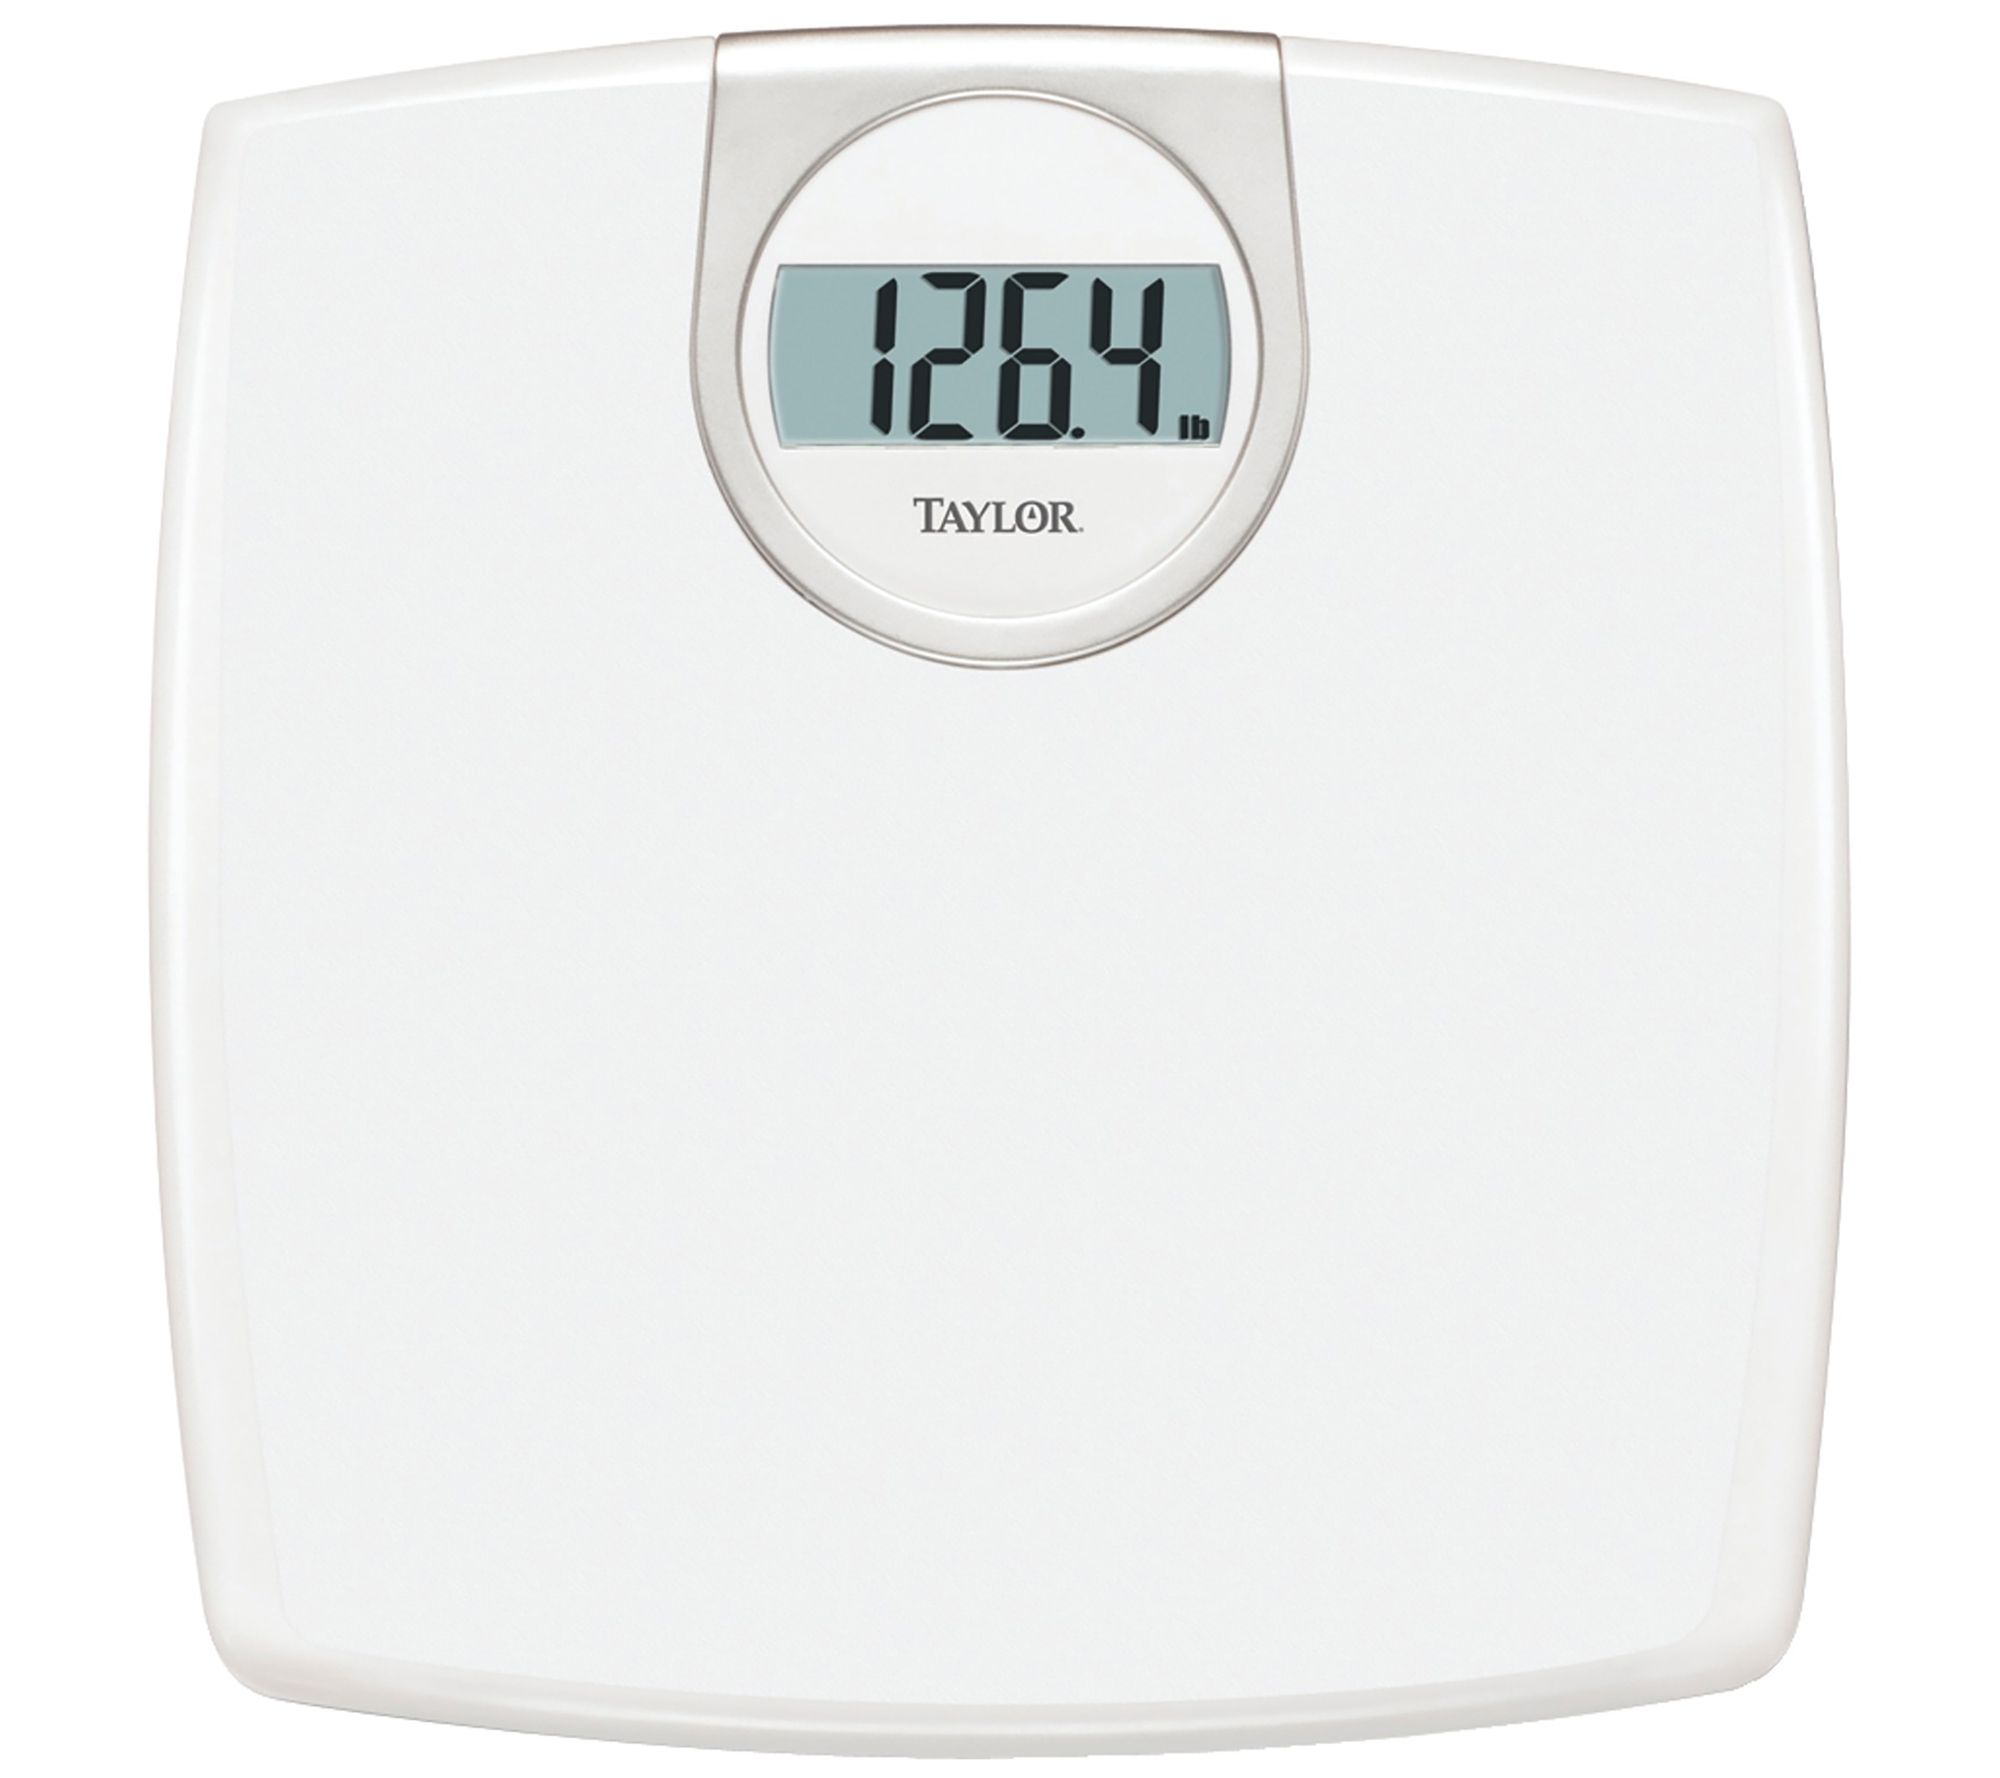 DUKAP LIFE Digital Bathroom Body Weight Scale 